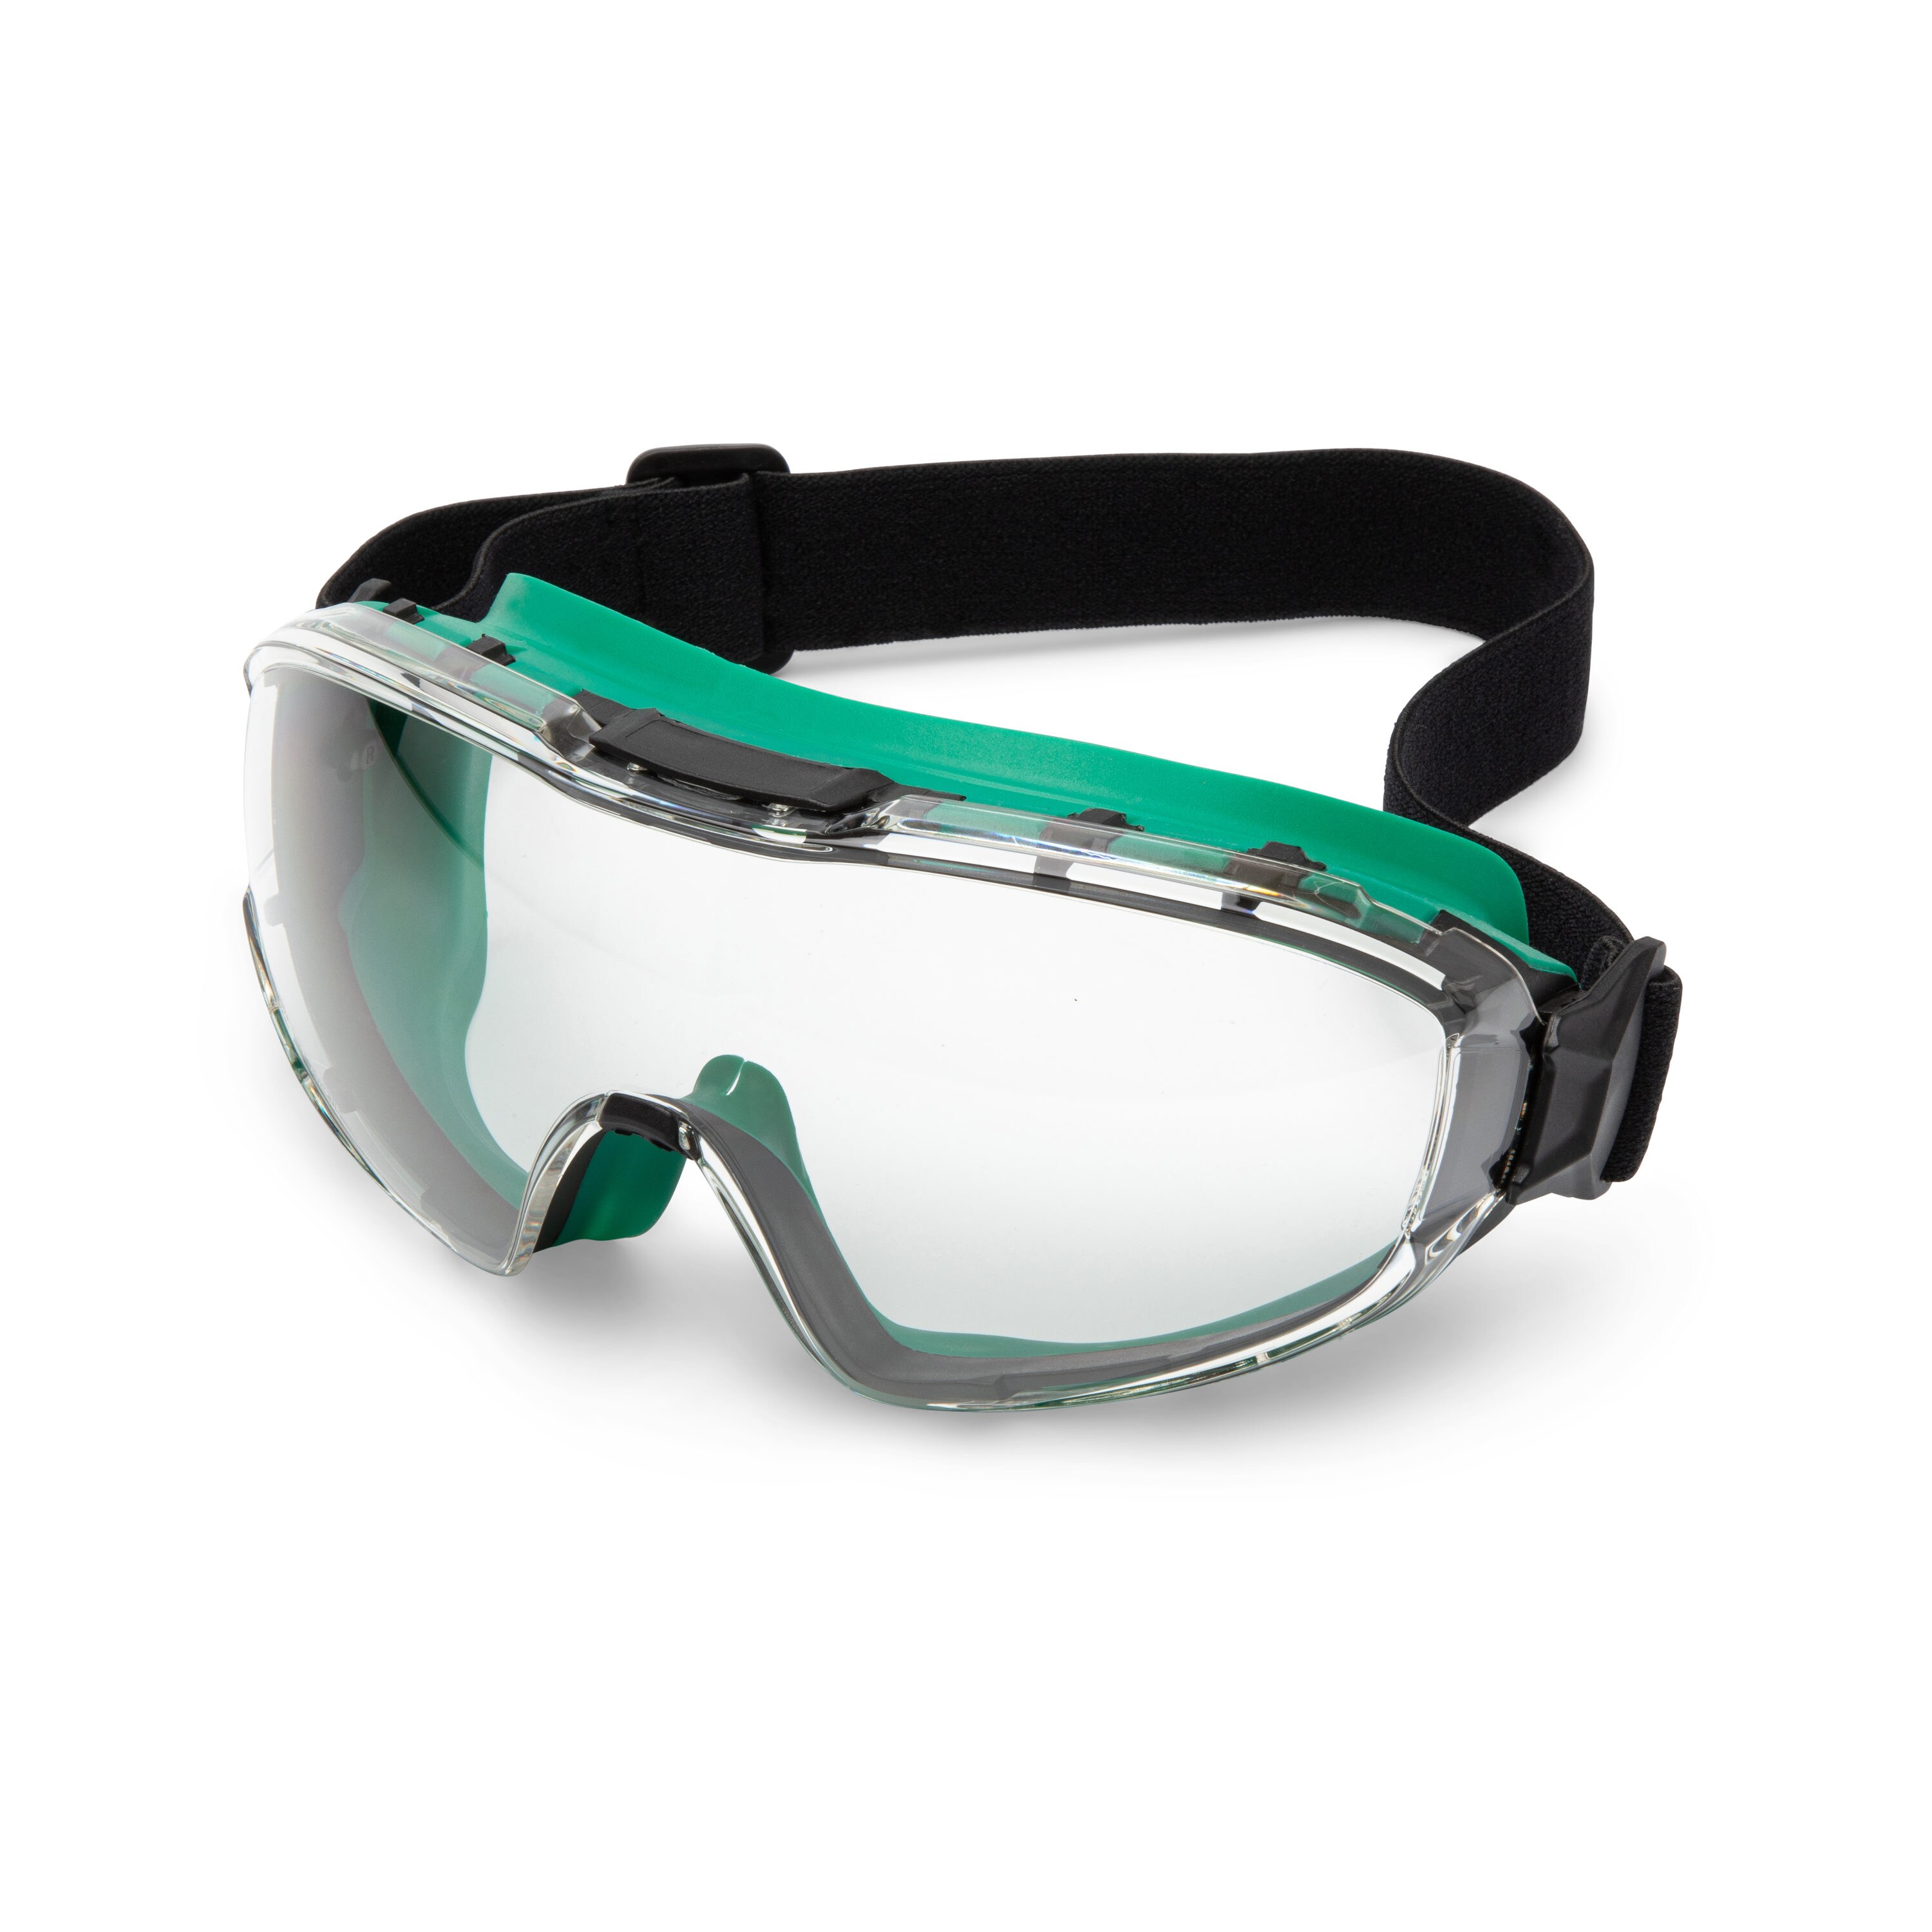 10 Packs Ligthweight Safety Goggles Dustproof Labor Eyewears Glasses 